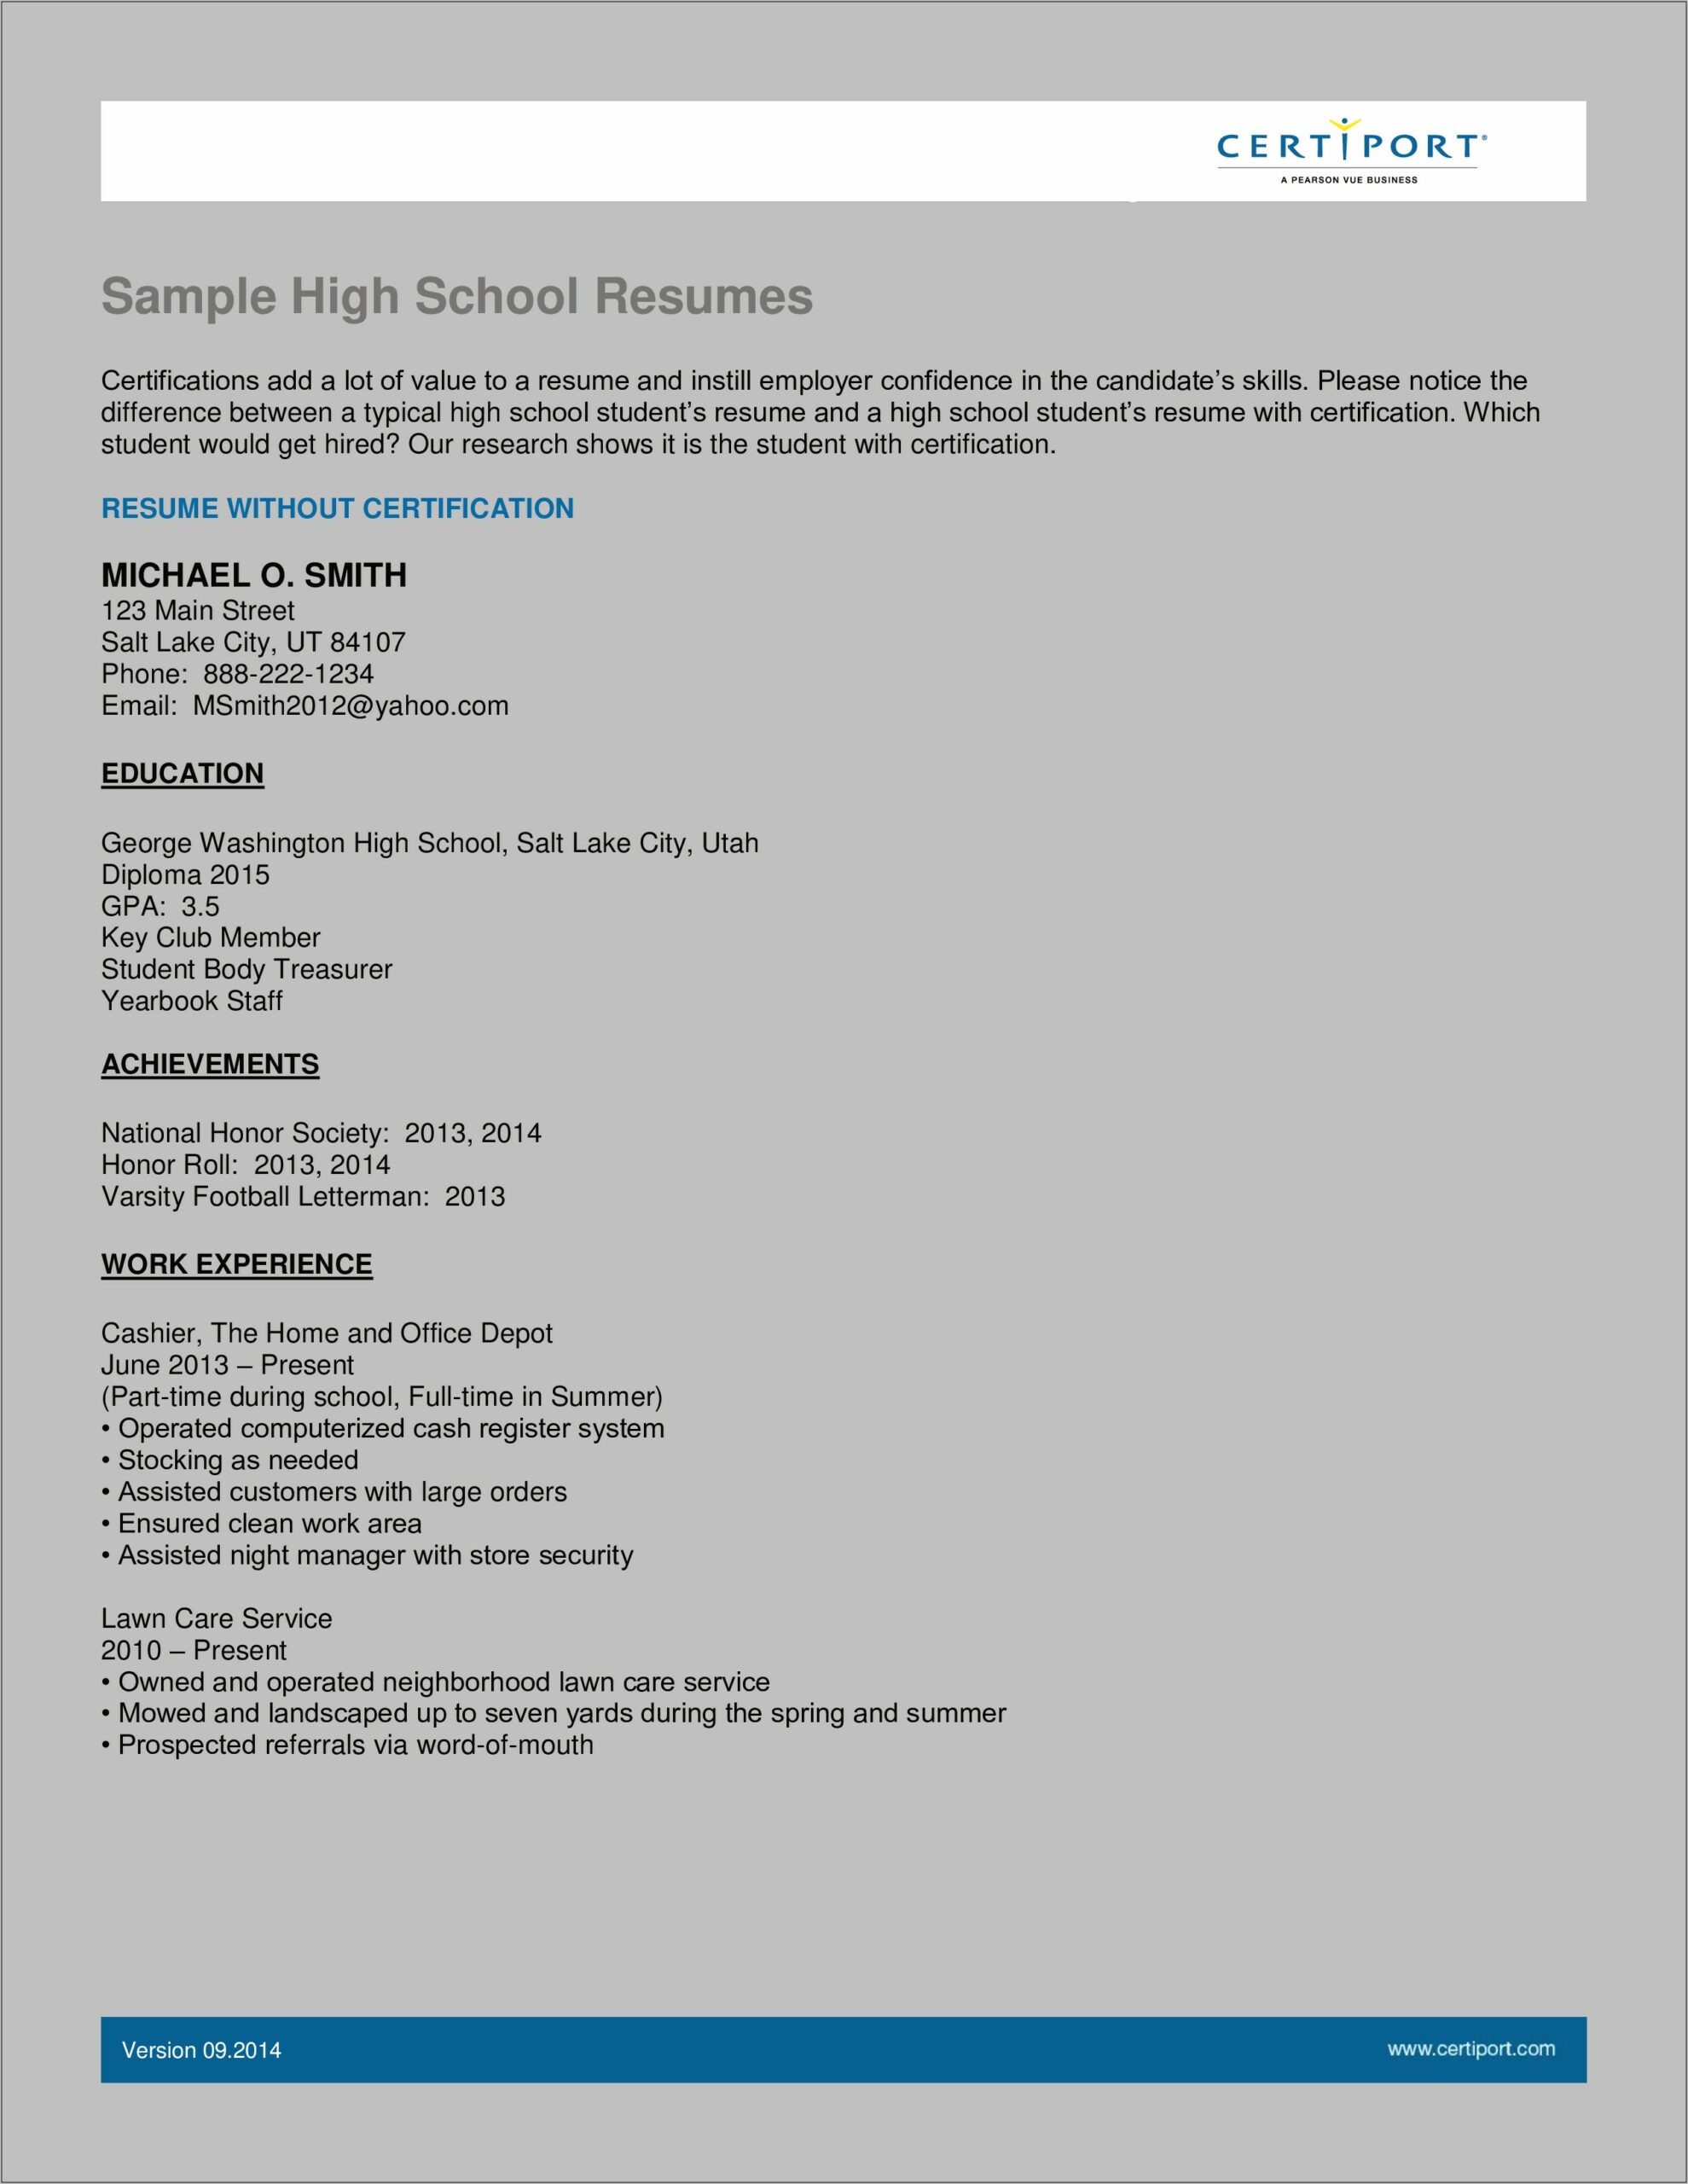 Sample Resume For National Honor Society Application